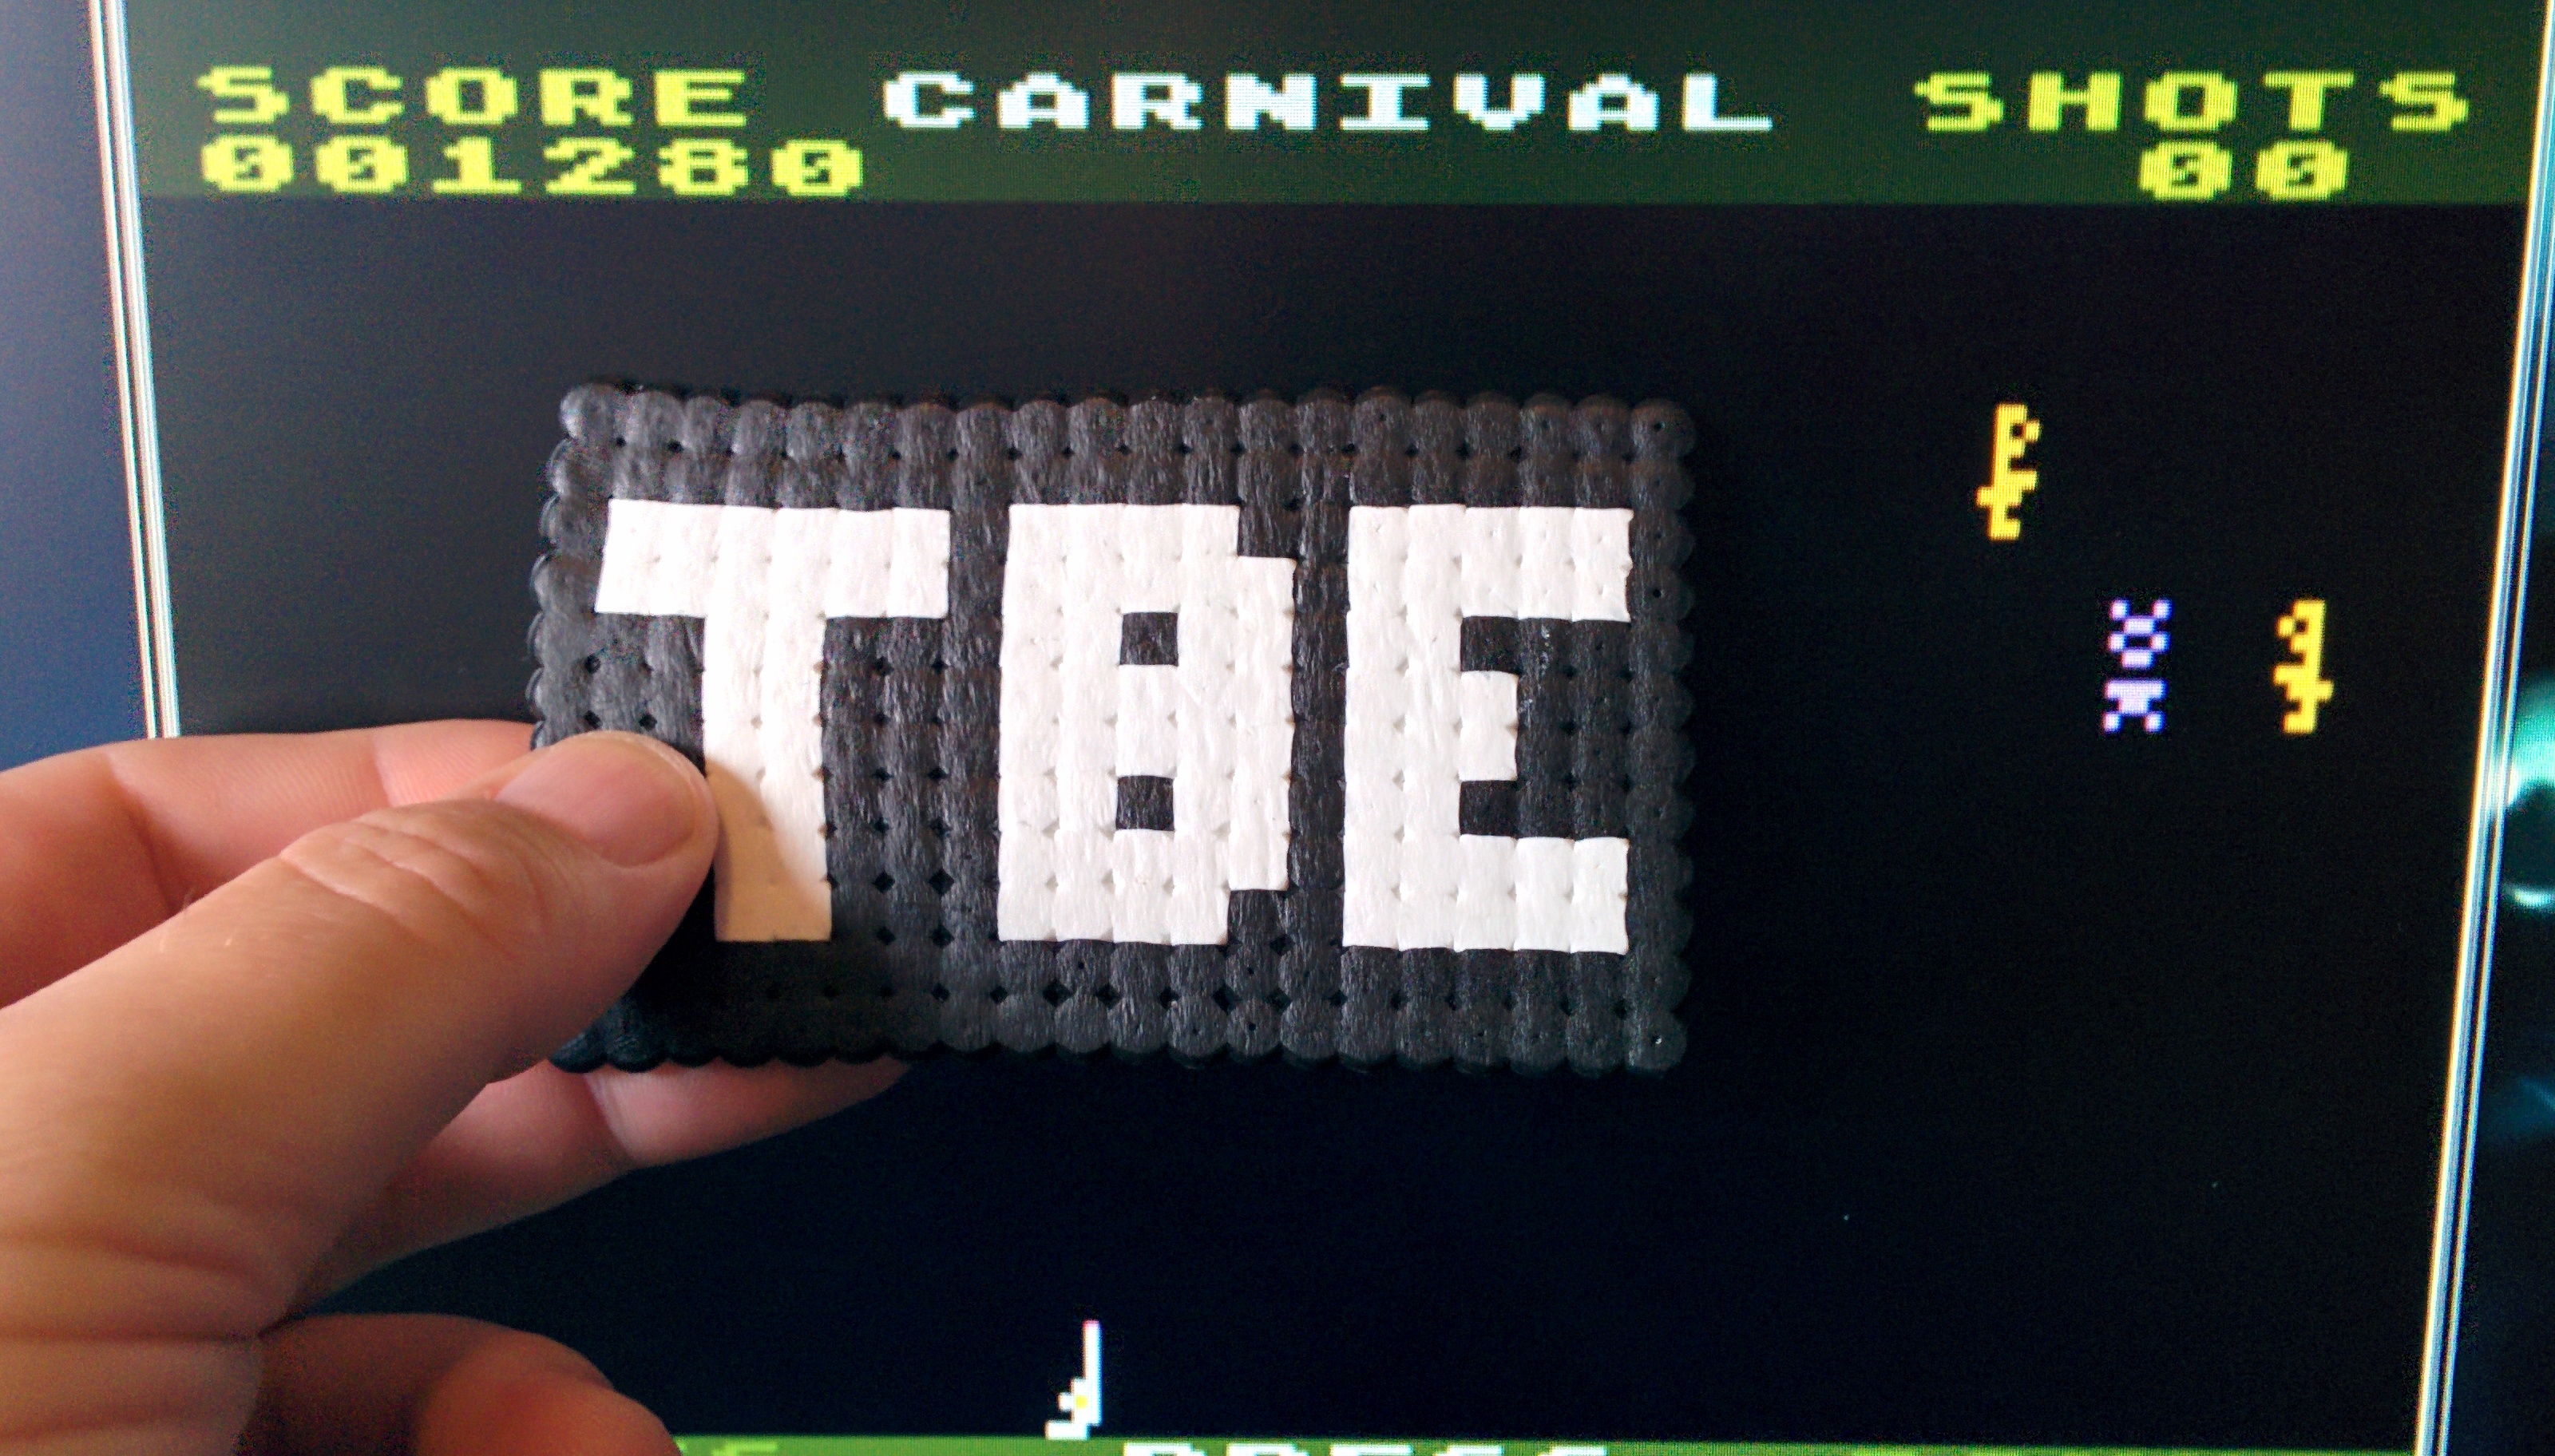 Sixx: Carnival (Atari 400/800/XL/XE Emulated) 1,280 points on 2014-10-21 04:19:21